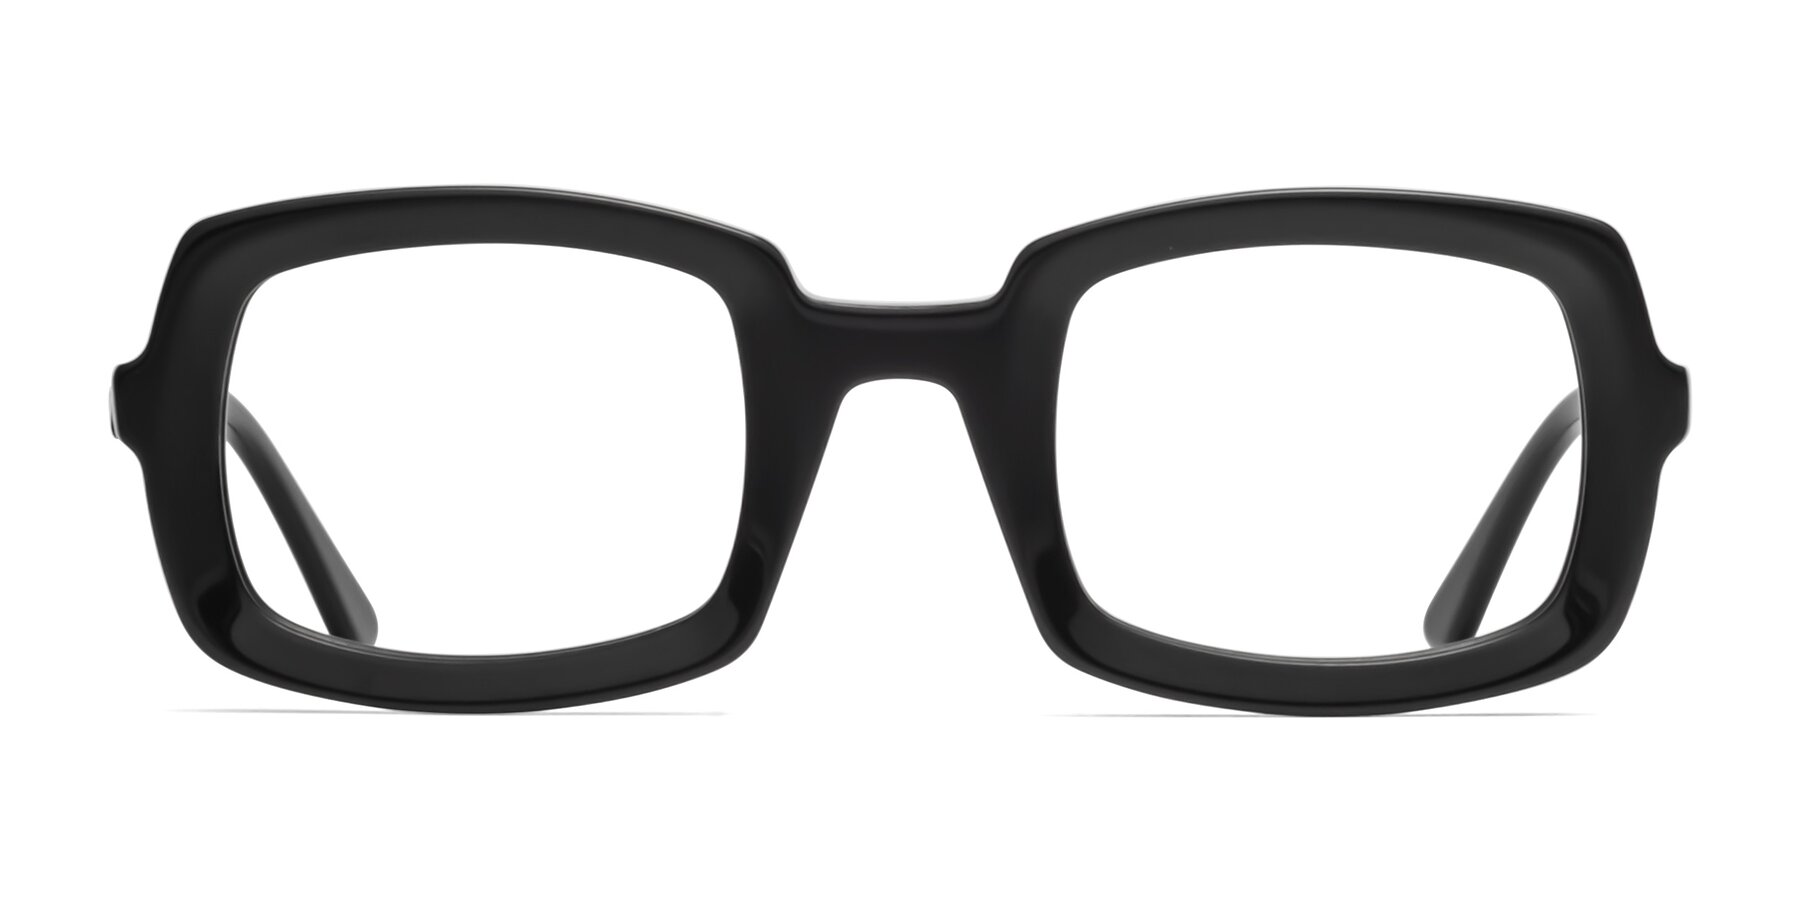 Font - Black Sunglasses Frame